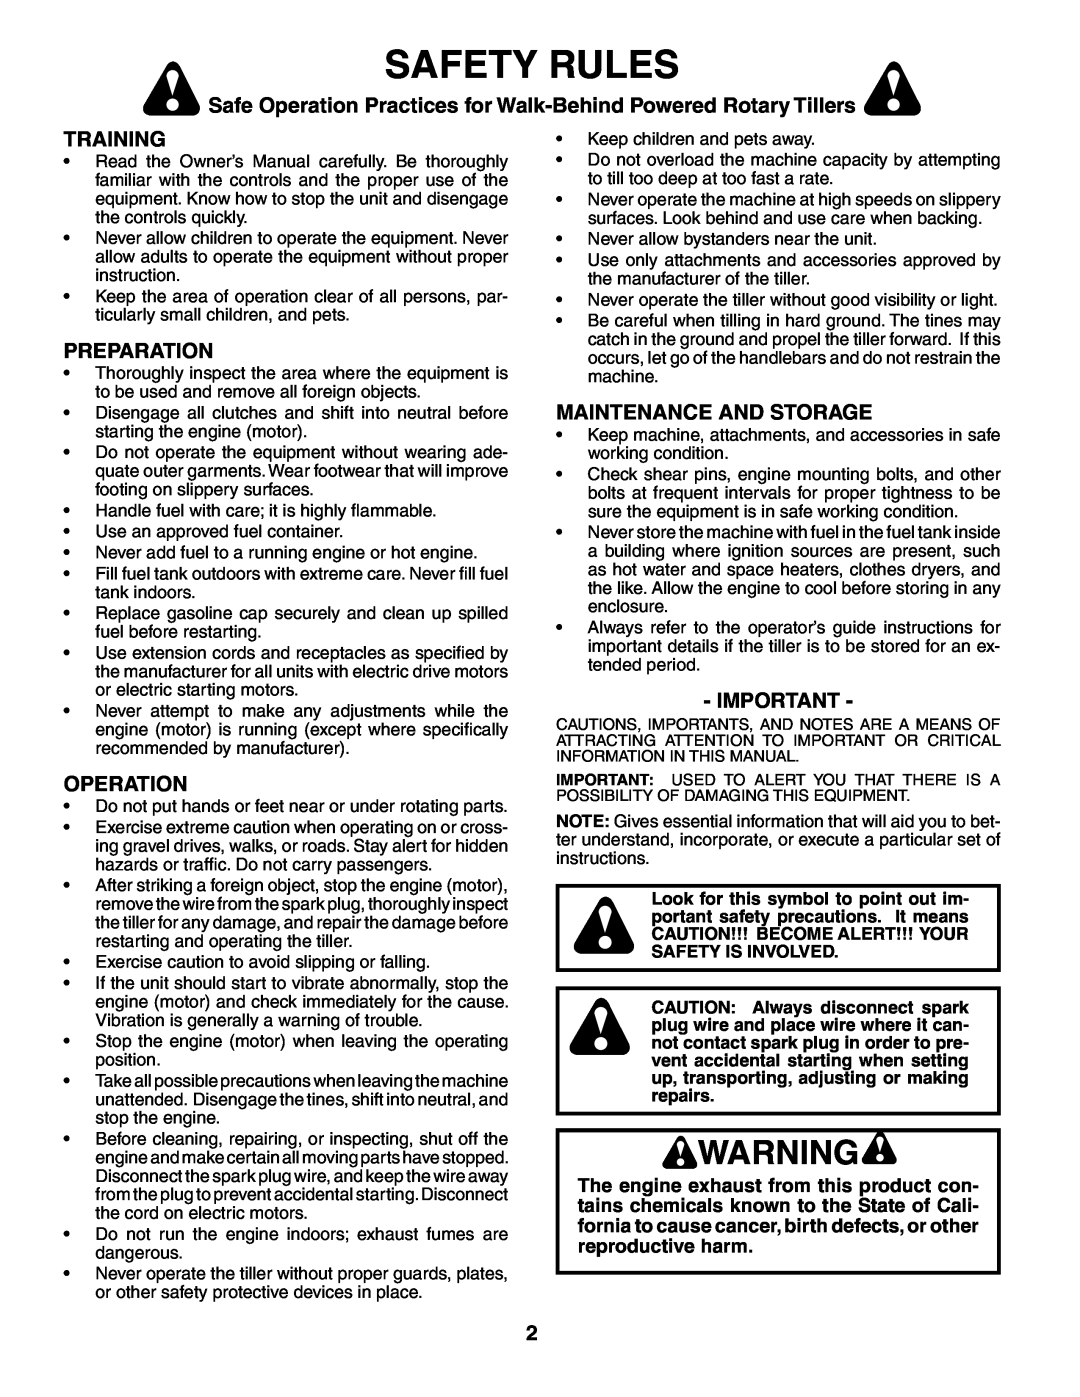 Husqvarna 500RTT owner manual Safety Rules, Training, Preparation, Operation, Maintenance And Storage 